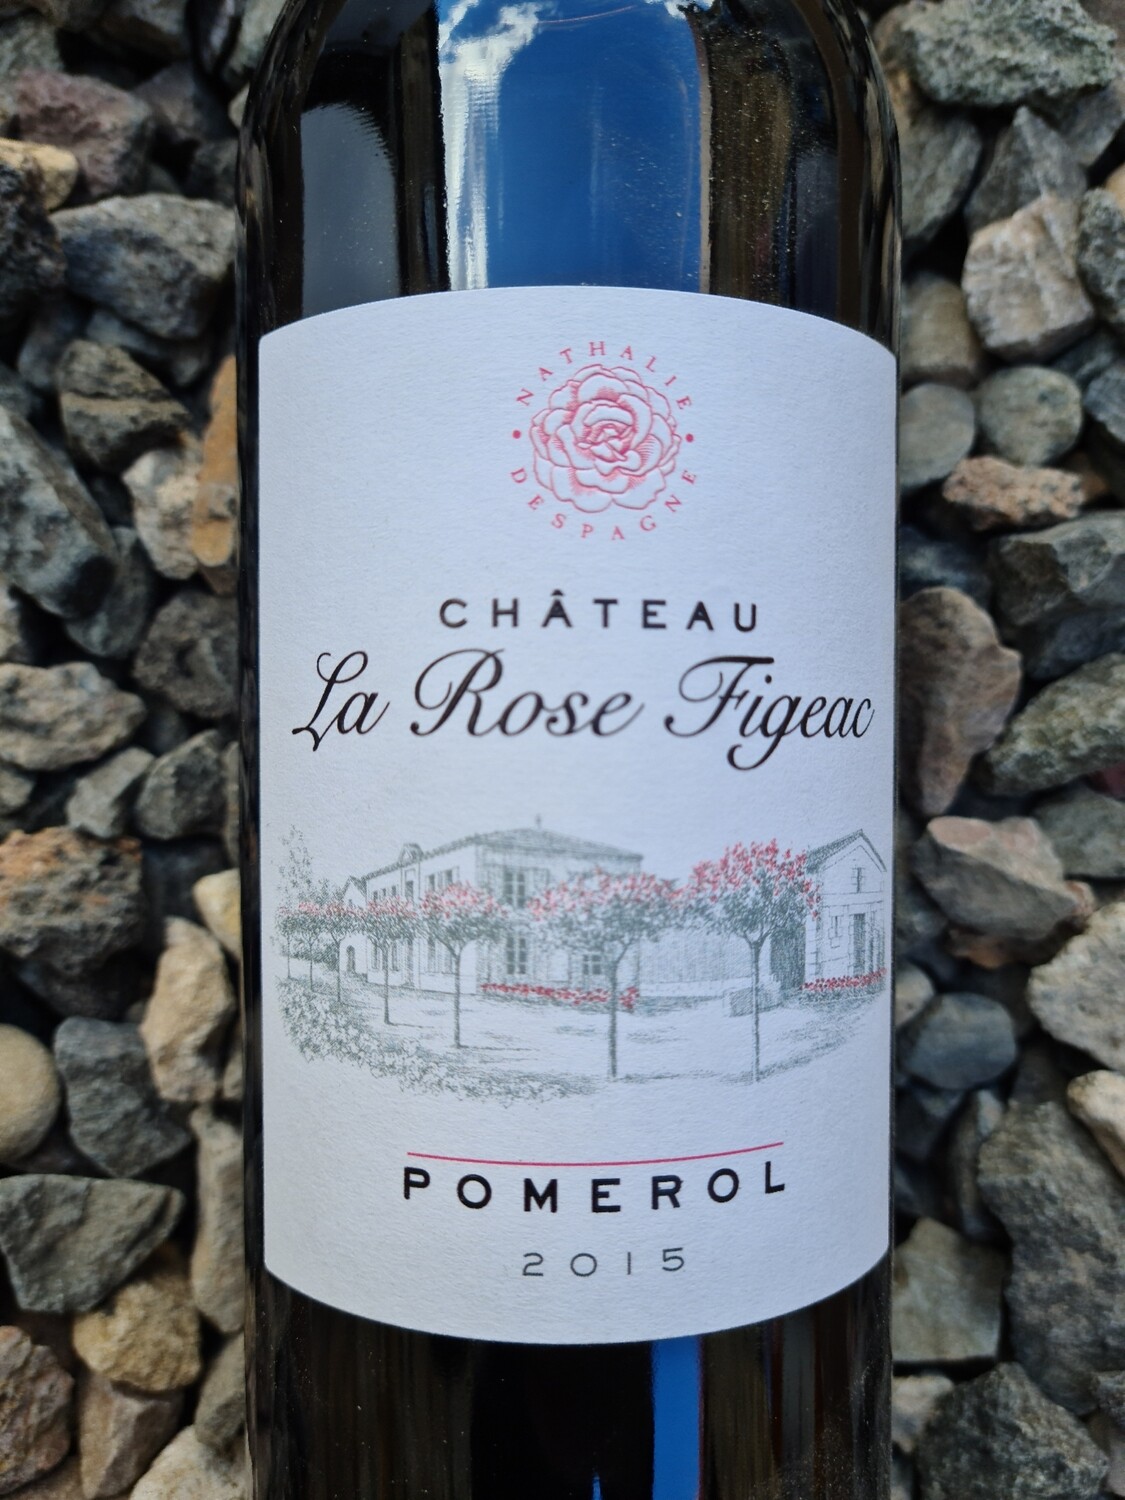 Chateau La Rose Figeac 2015 Pomerol